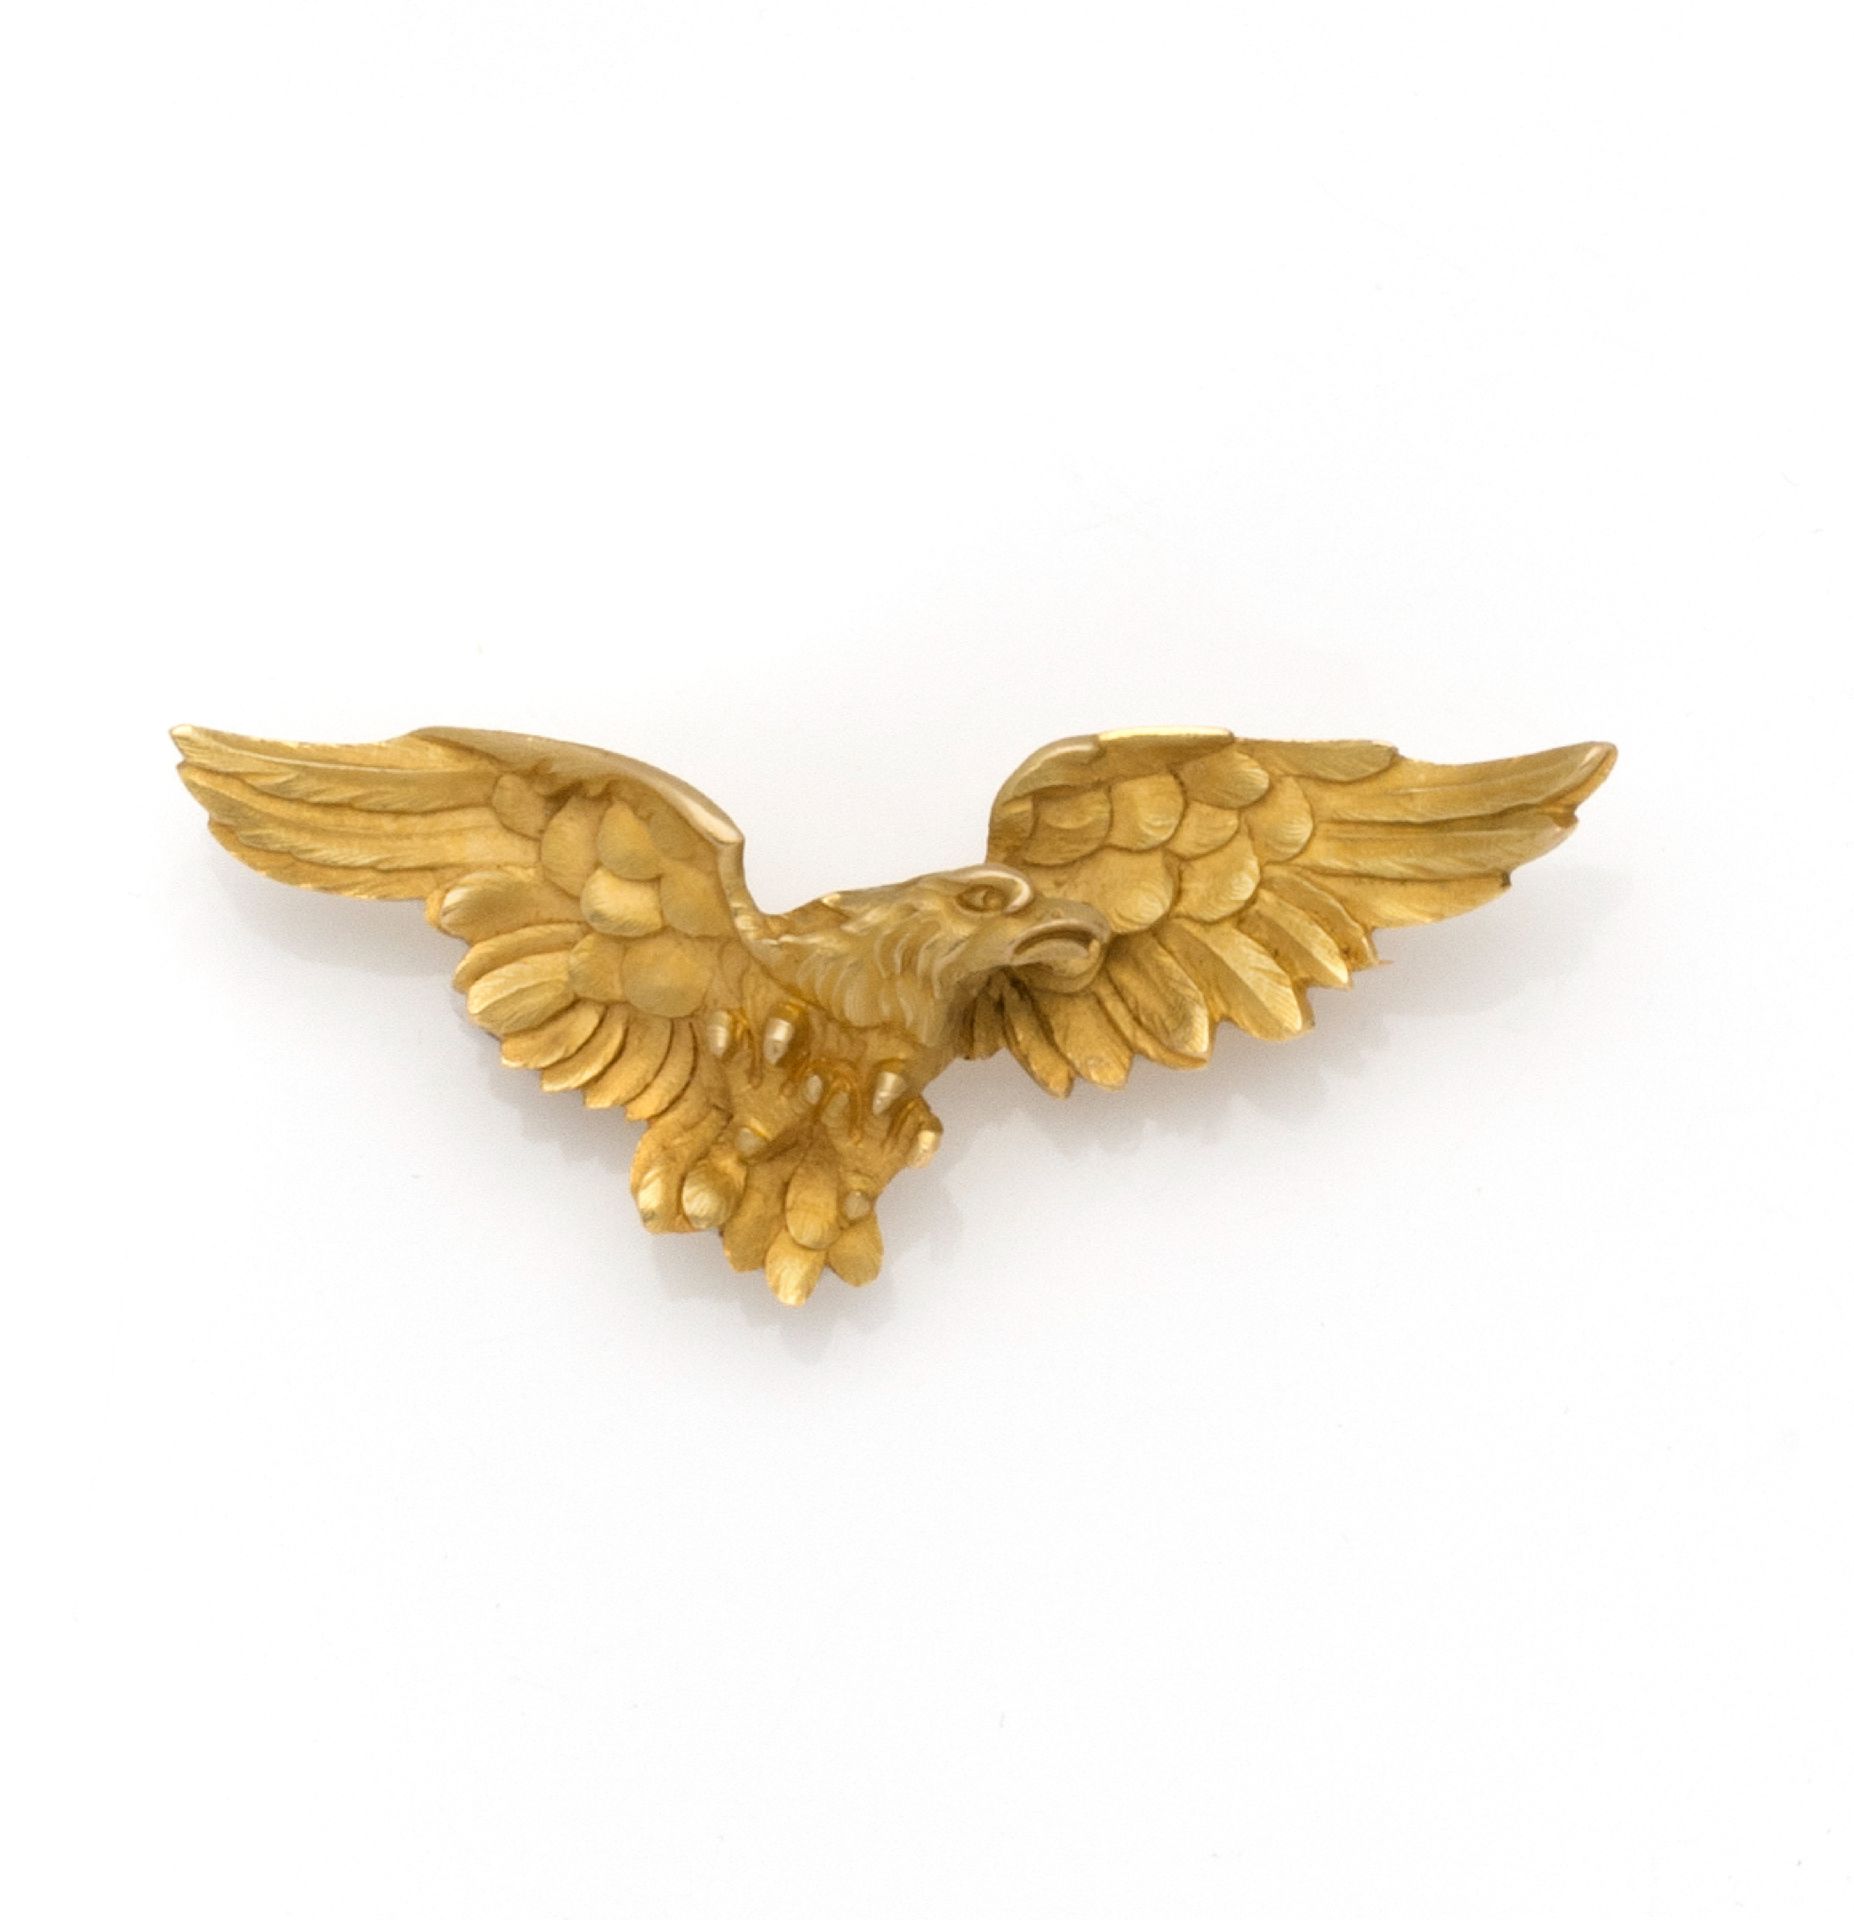 Null 18K(750/1000)黄金吊坠胸针，代表一只雄鹰展开翅膀和爪子。

编号为316 996

尺寸：6.9 x 2 cm - 重量：19.5 g